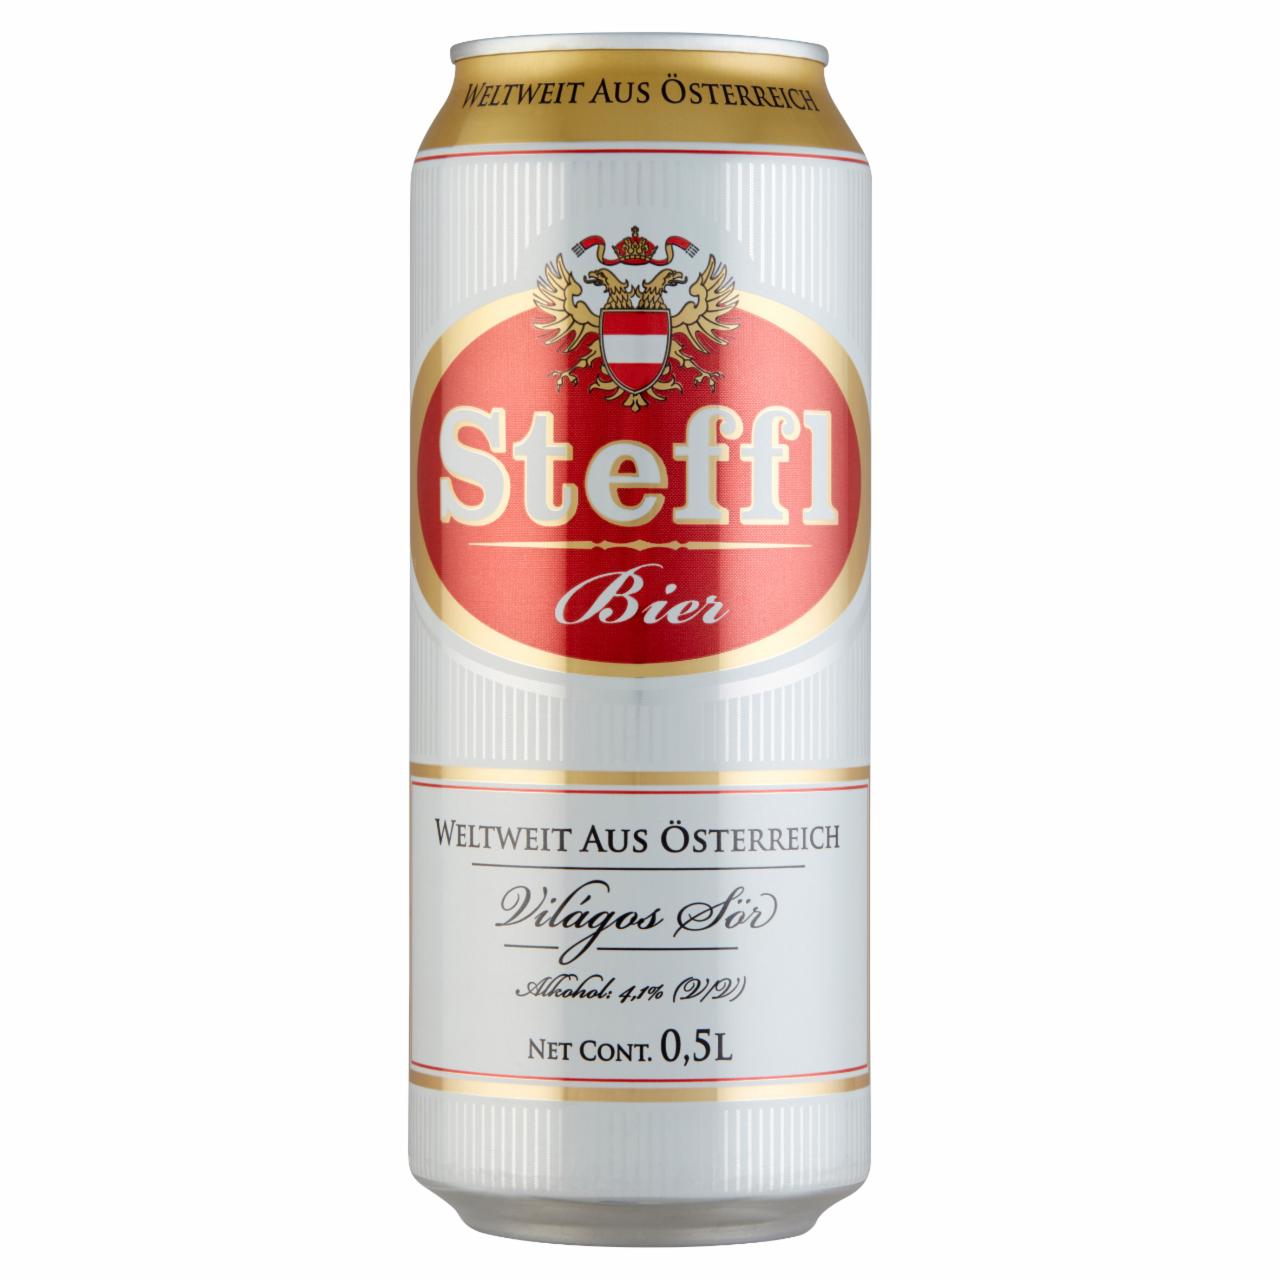 Képek - Steffl világos sör 4,1% 0,5 l doboz